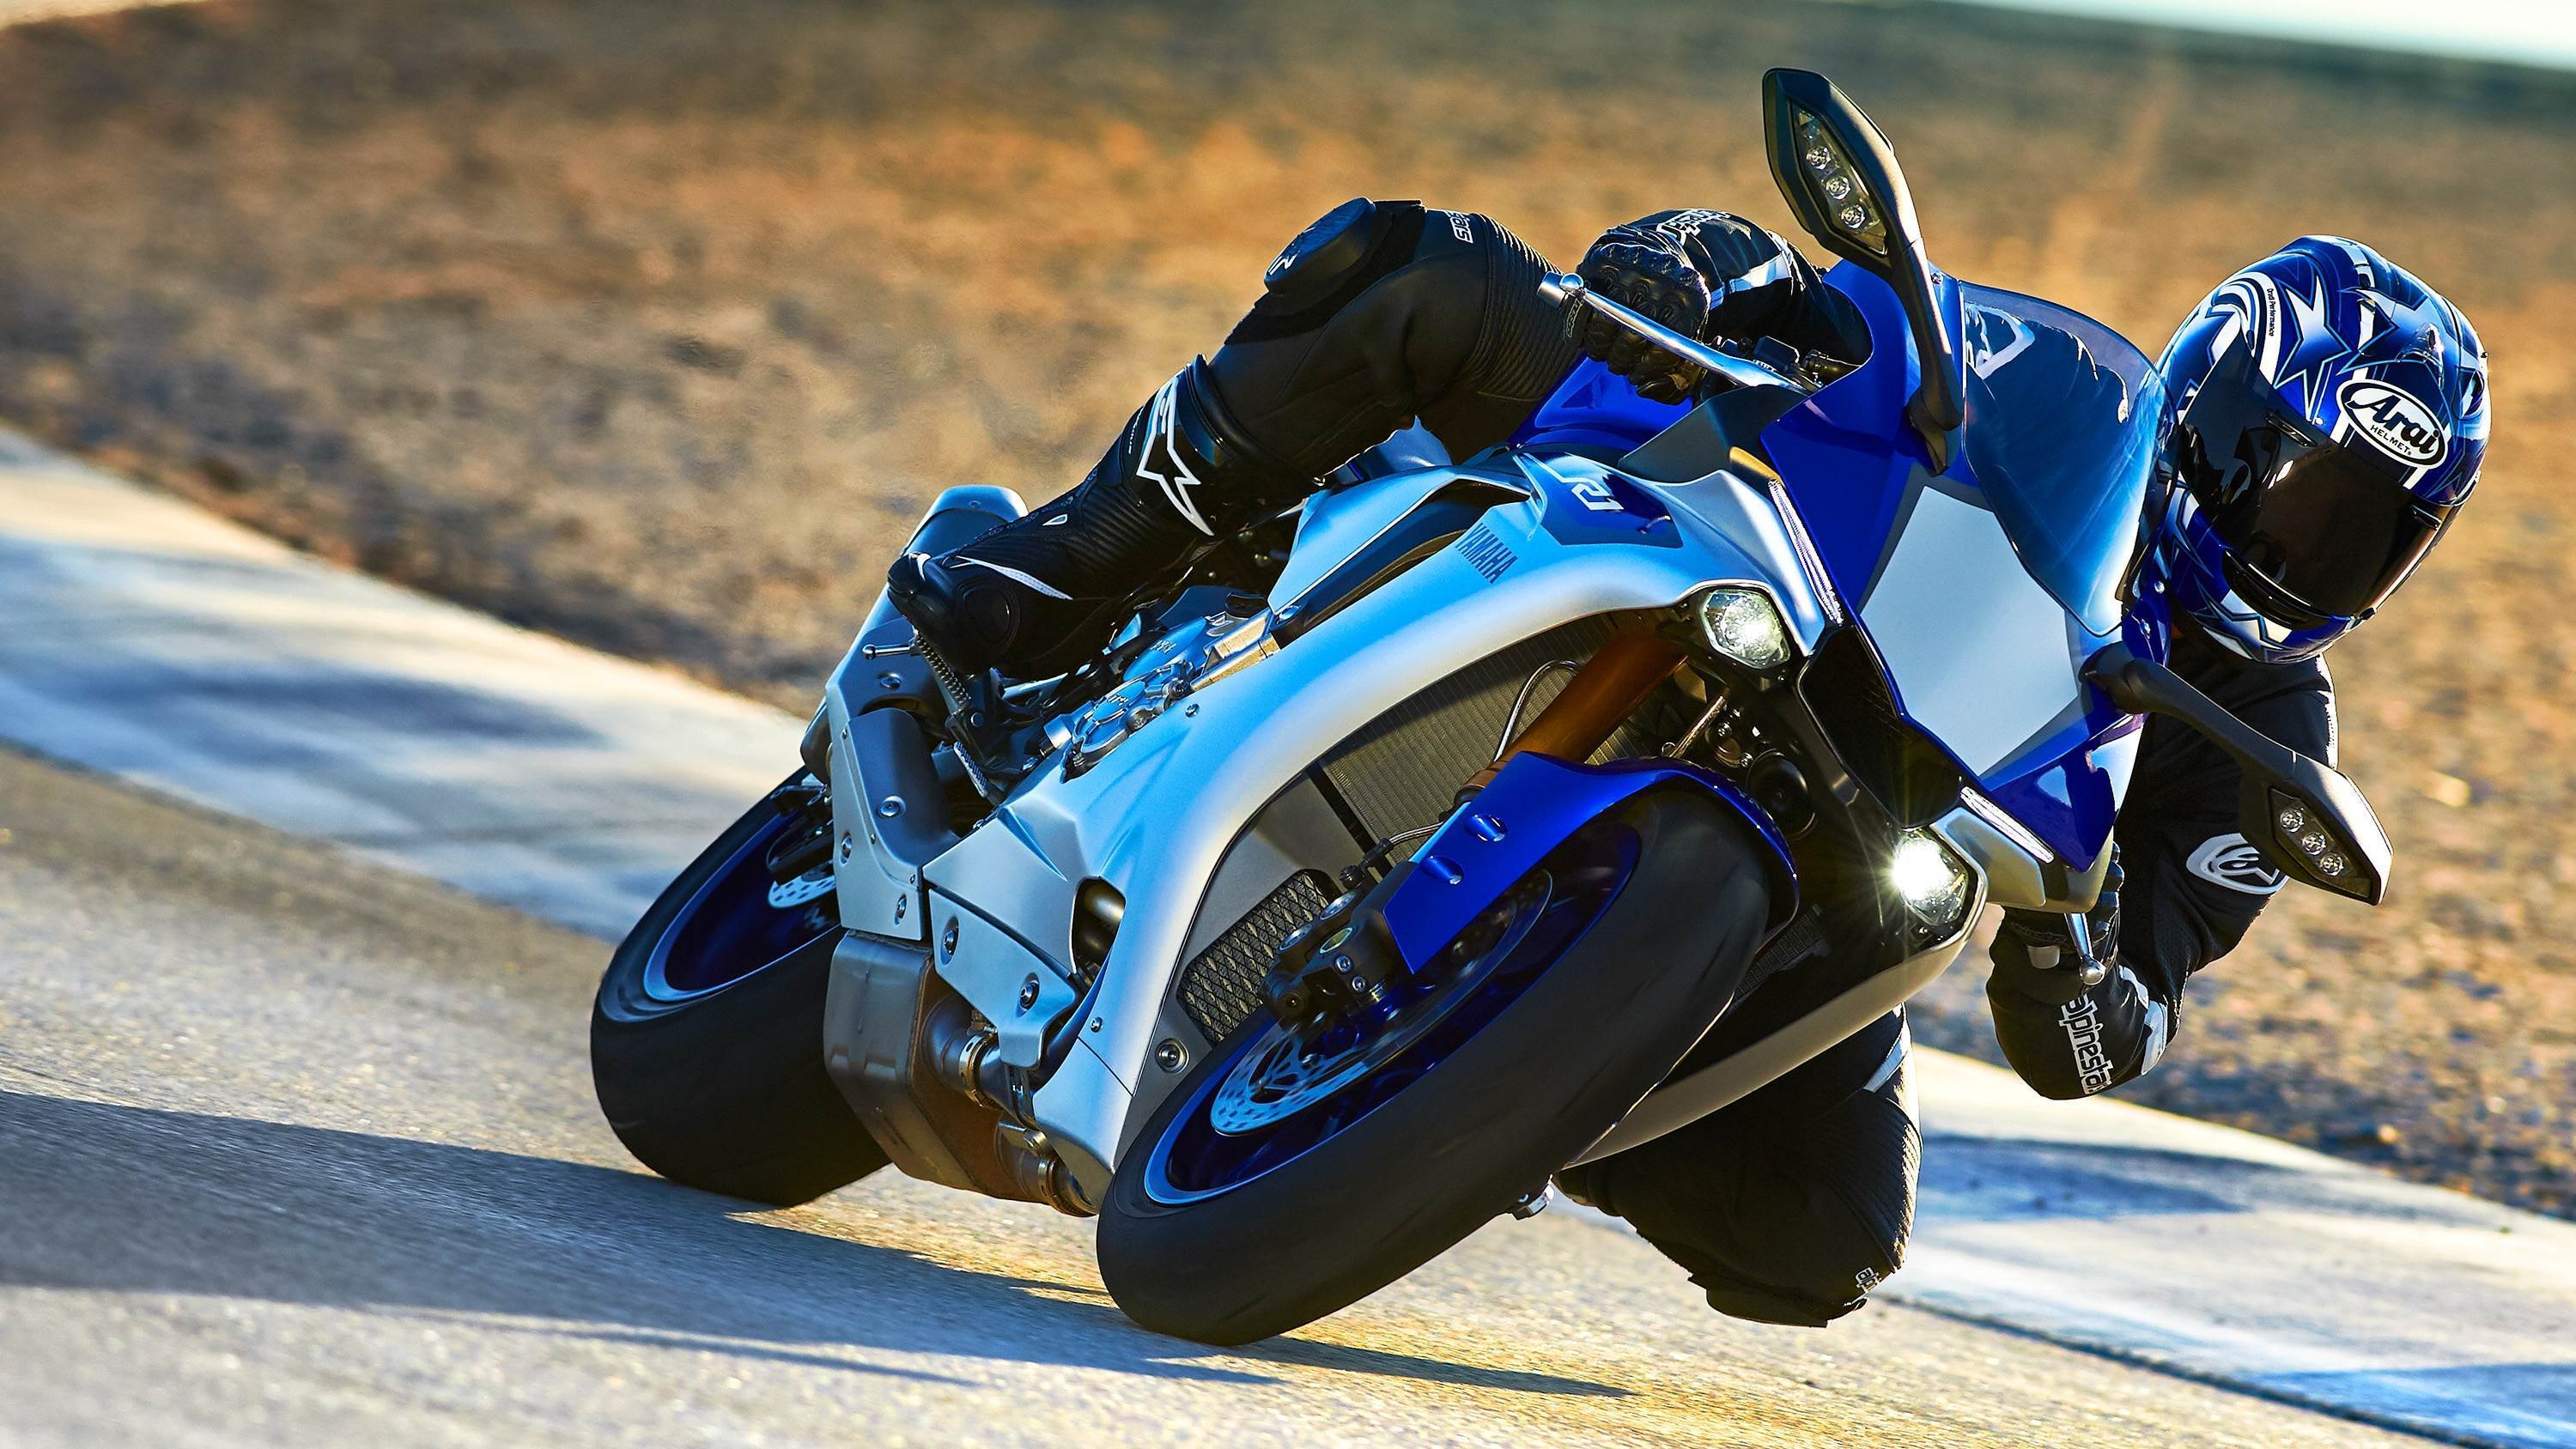 2015 wallpaper,motorcycle racer,motorcycle,vehicle,superbike racing,motorcycle racing